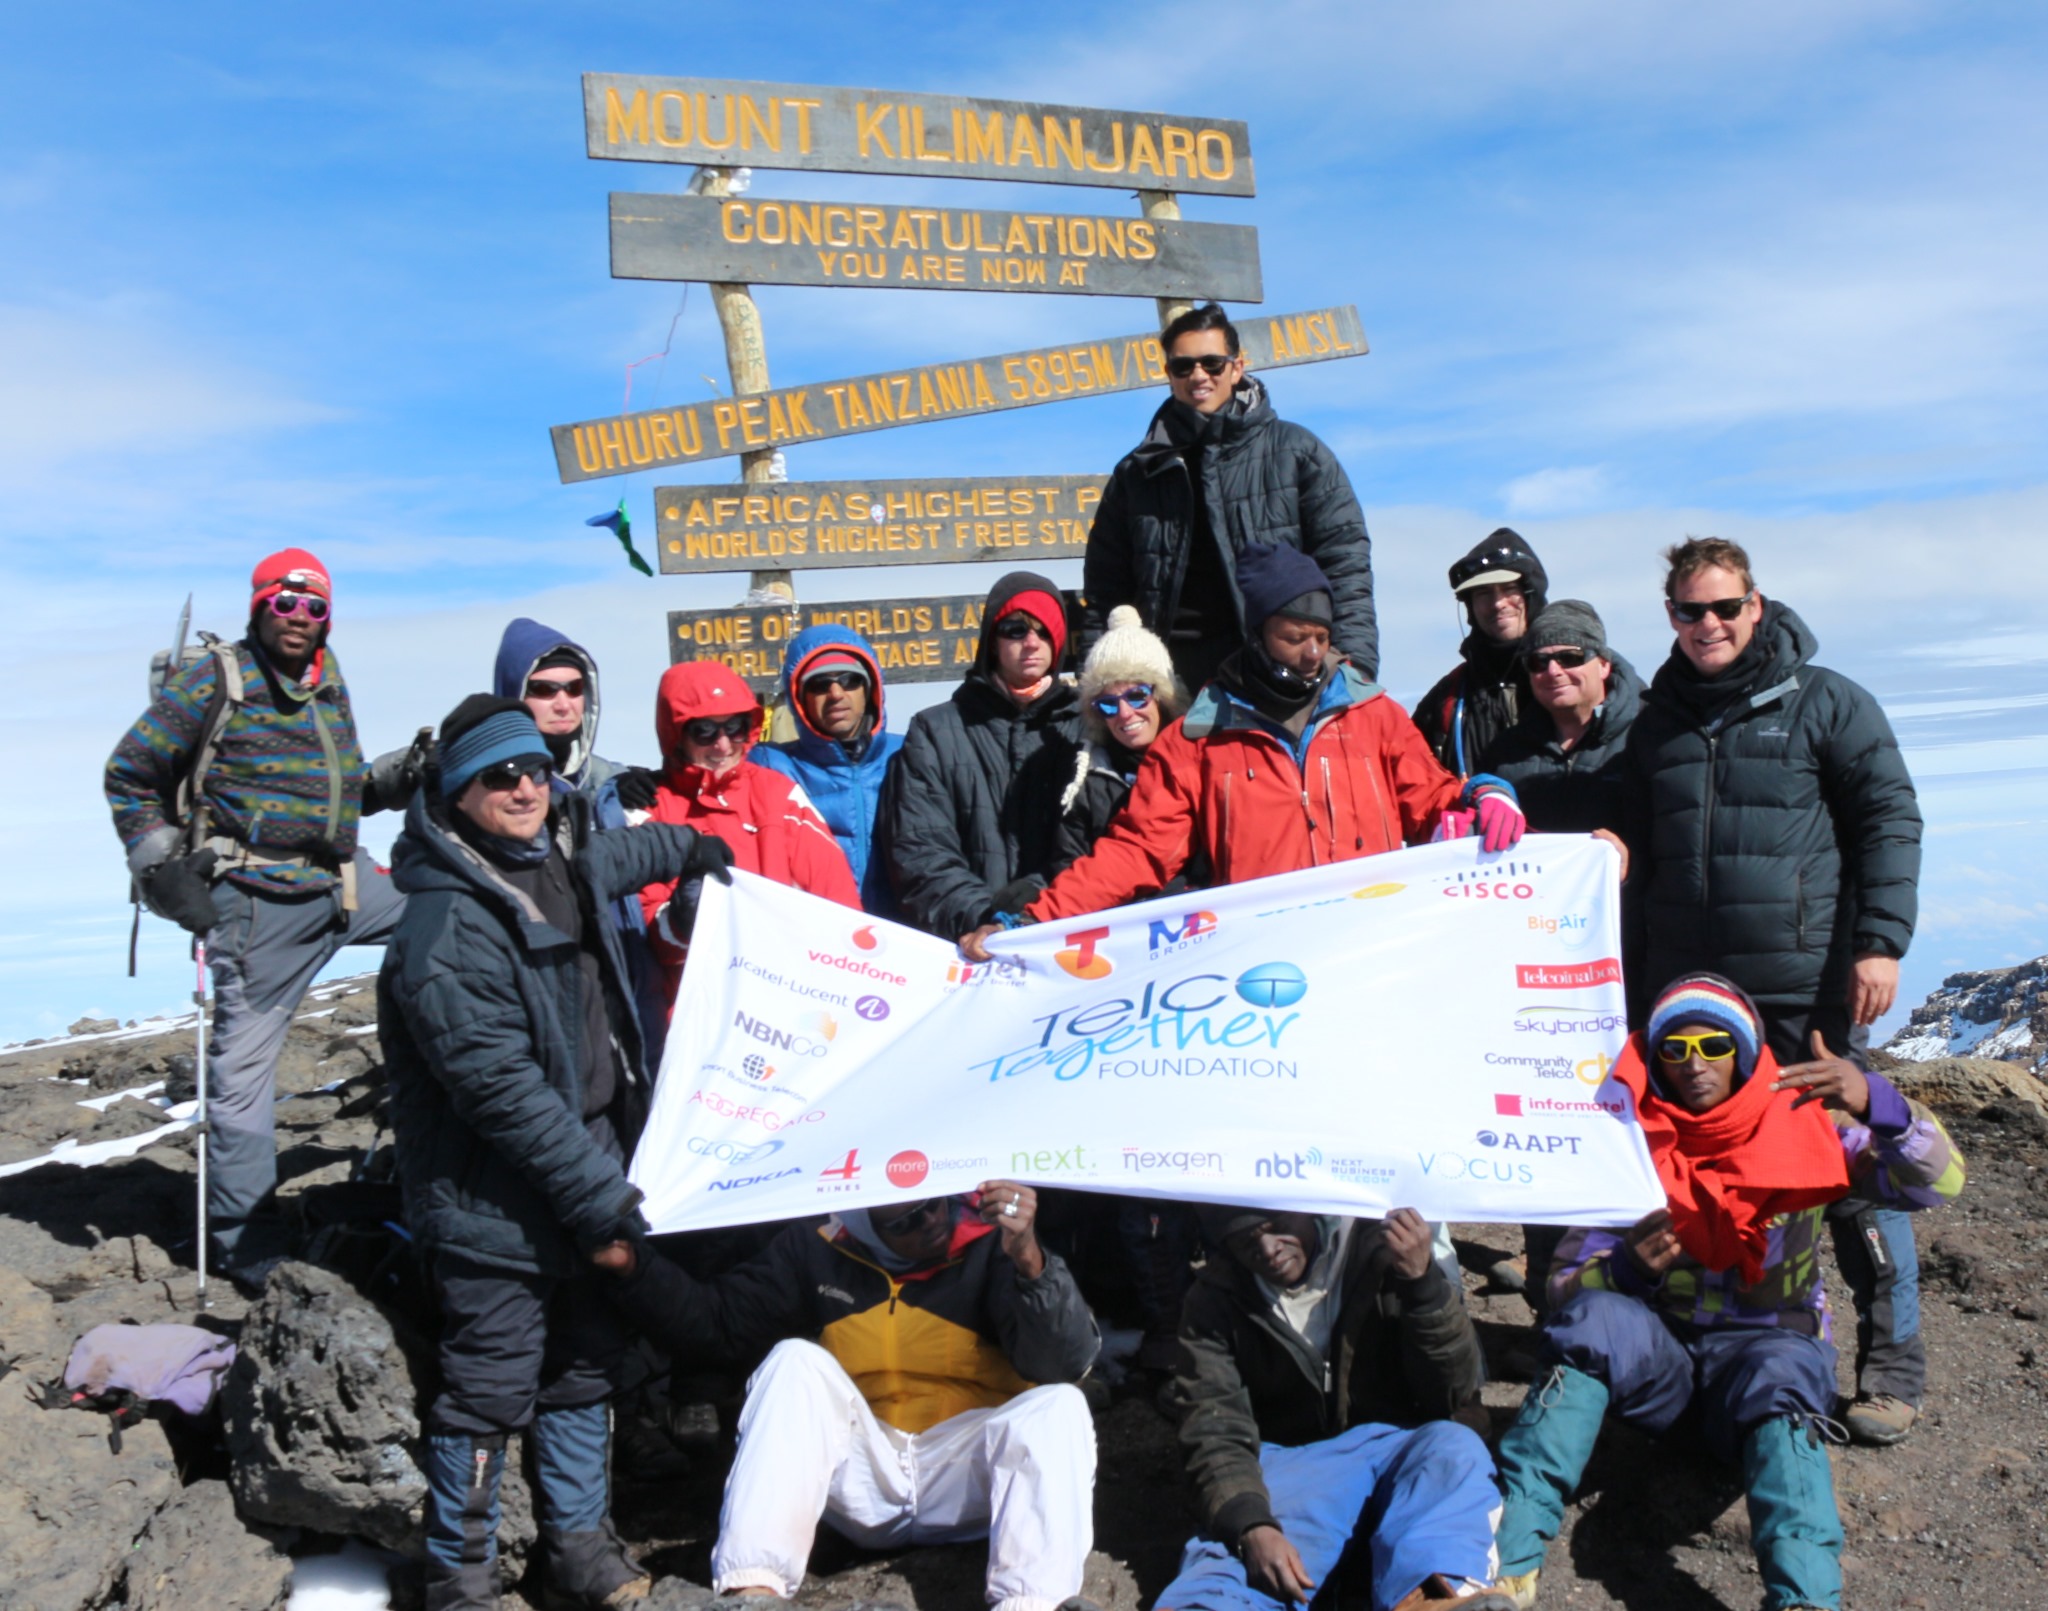 Kilimanjaro 2015 - Lemosho (Northern Route) - Day 6 - Stella Point down to Millenium Camp